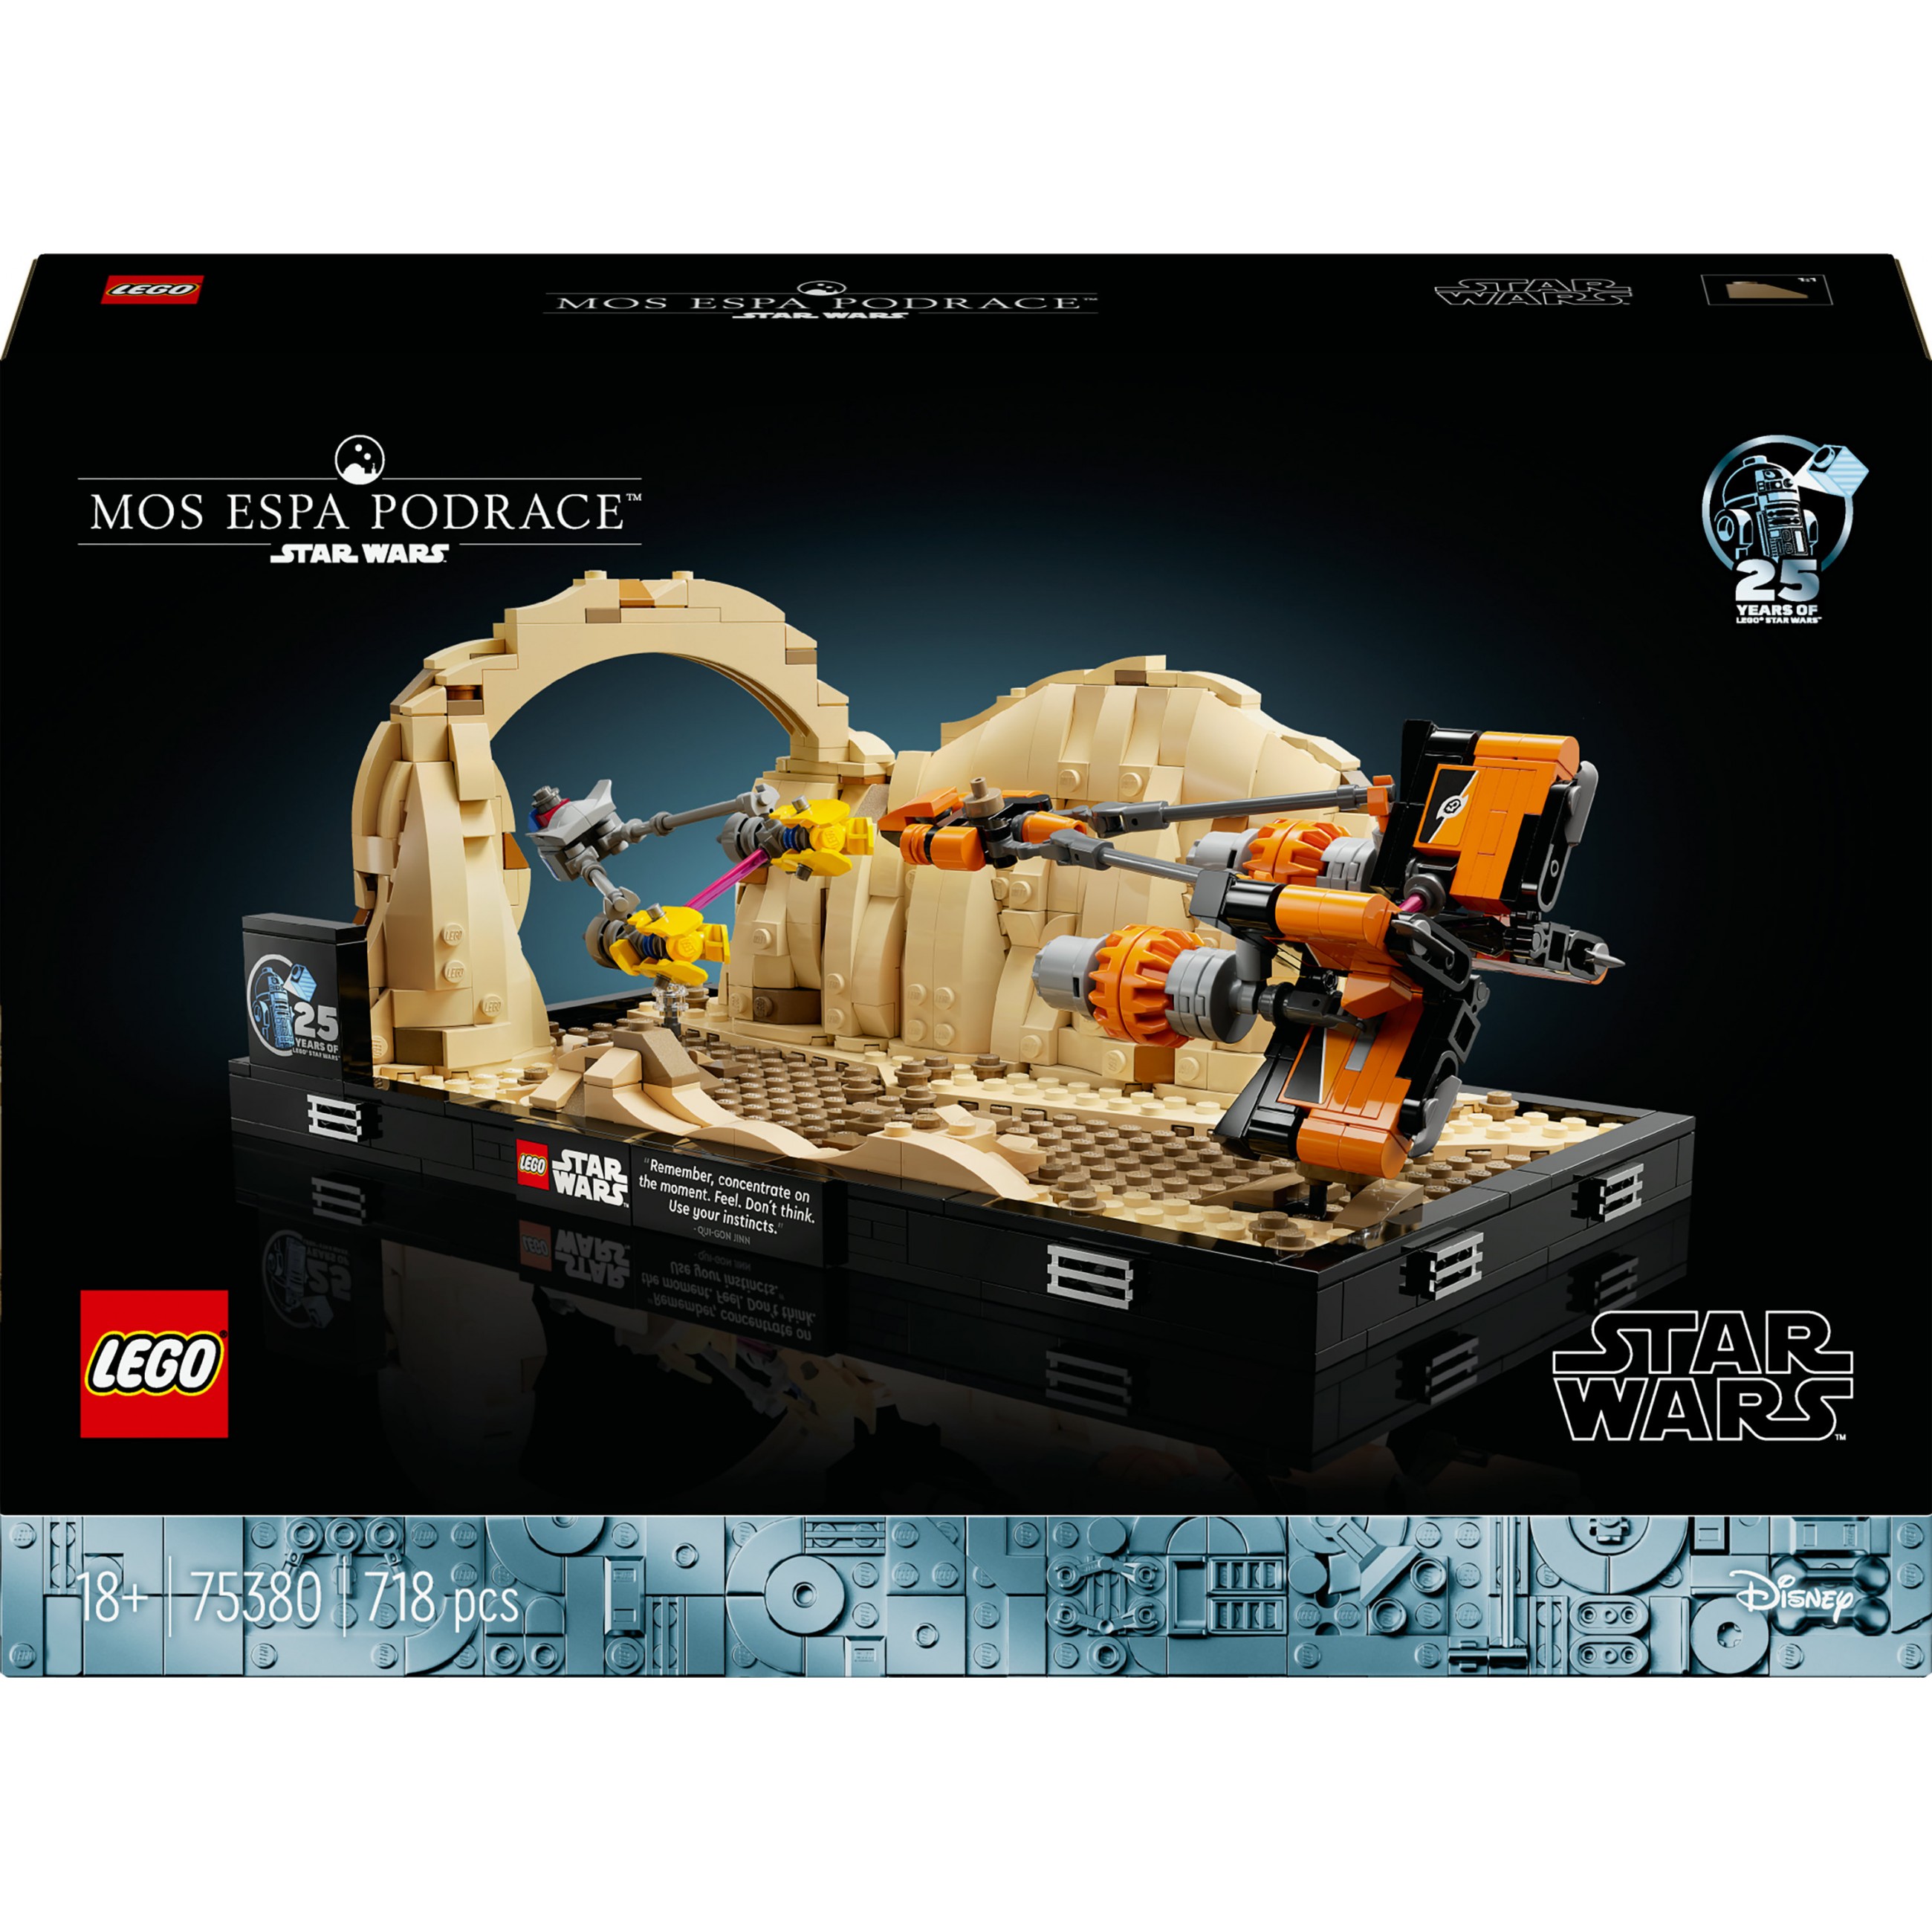 LEGO 75380 building toy